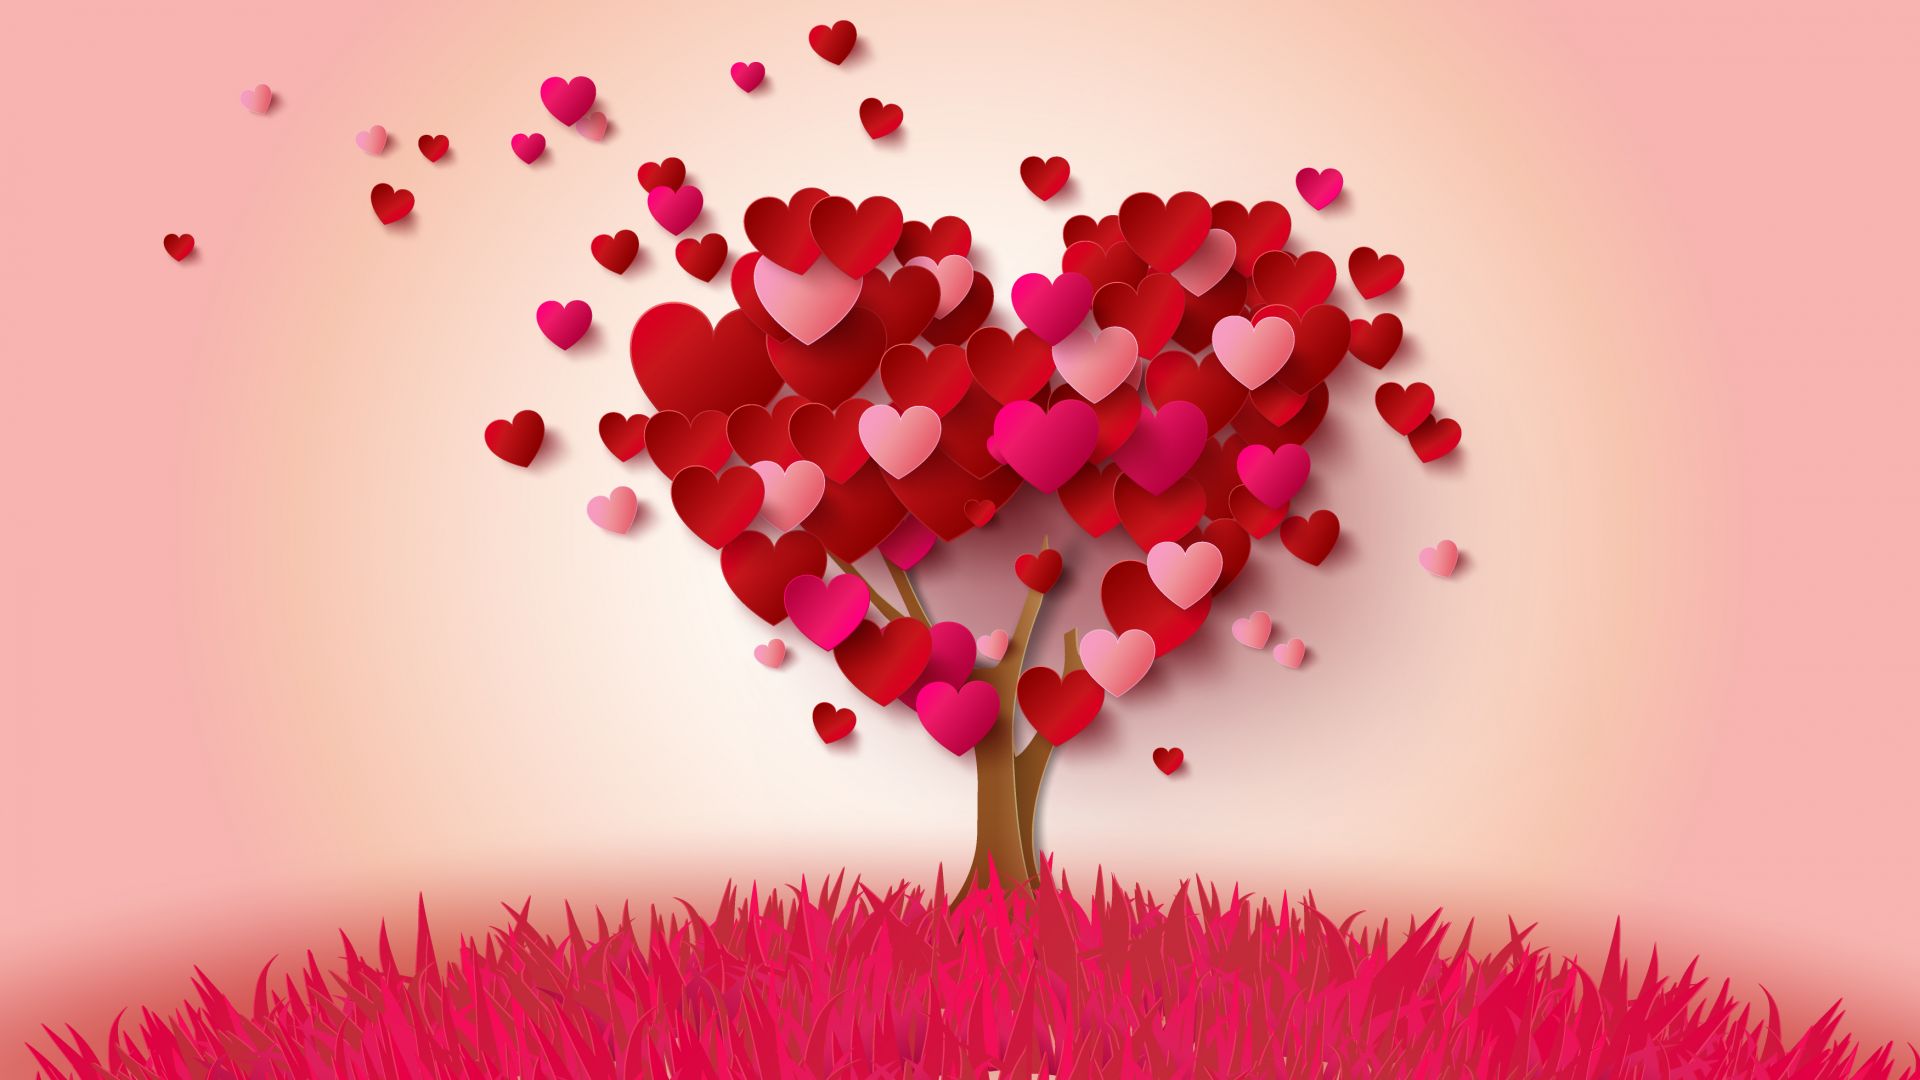 фото любовь, сердце, love image, heart, tree, 4k (horizontal)